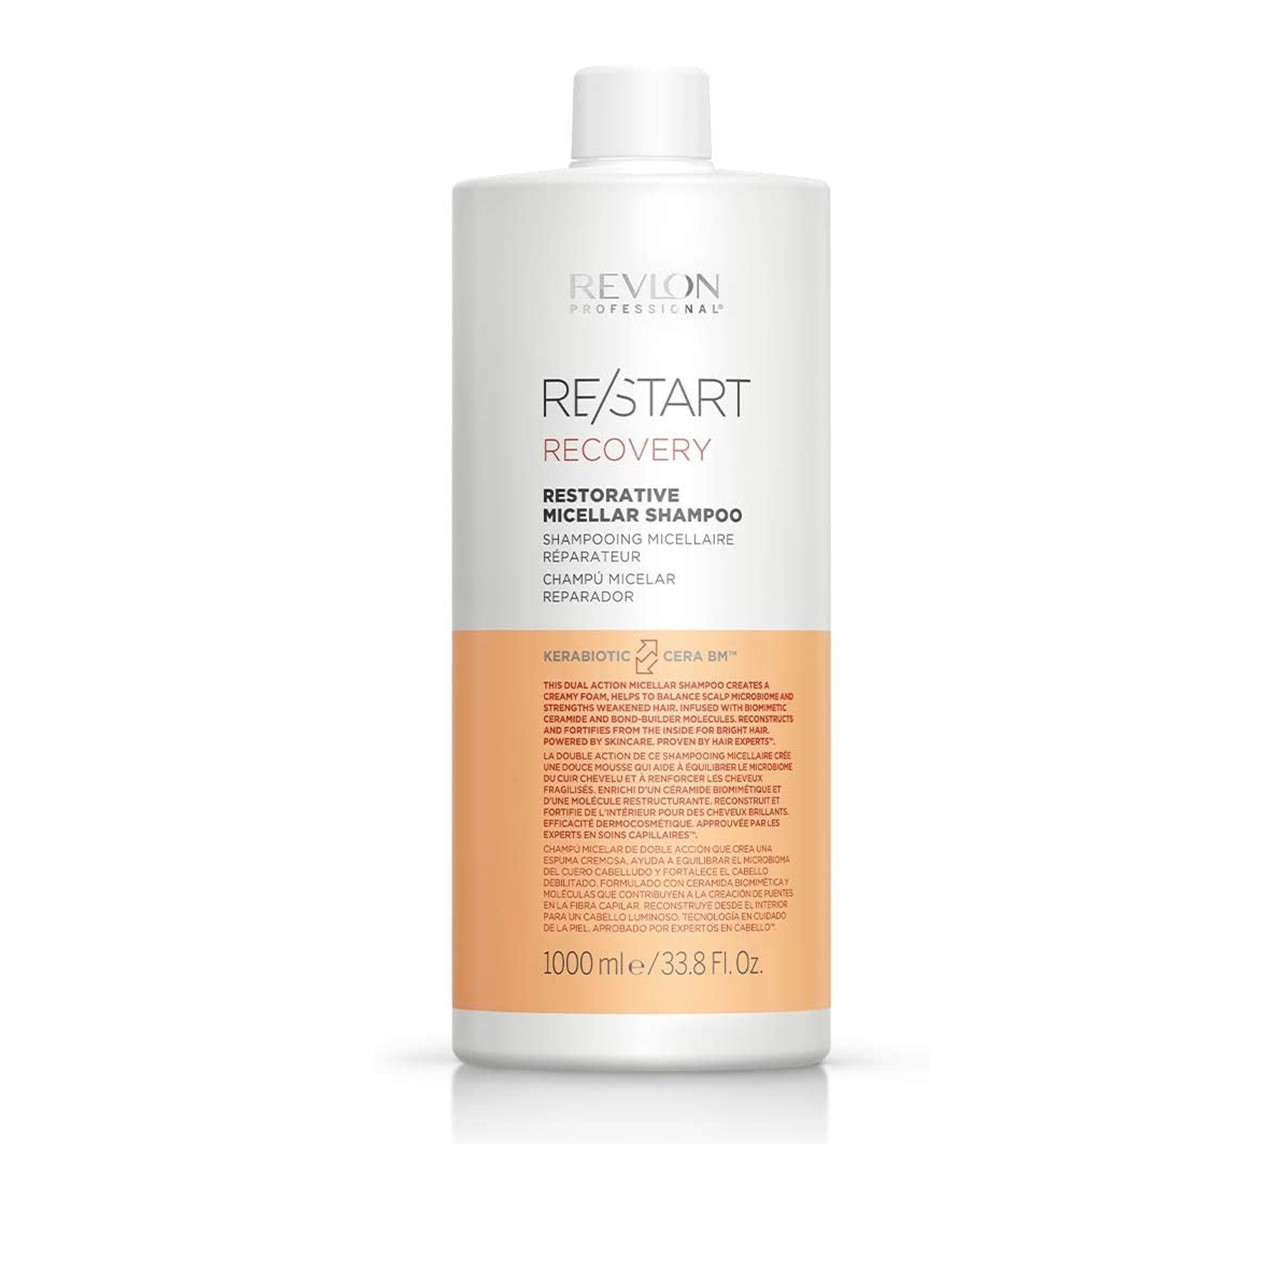 Revlon Professional Re/Start Recovery Restorative Shampoo 1L